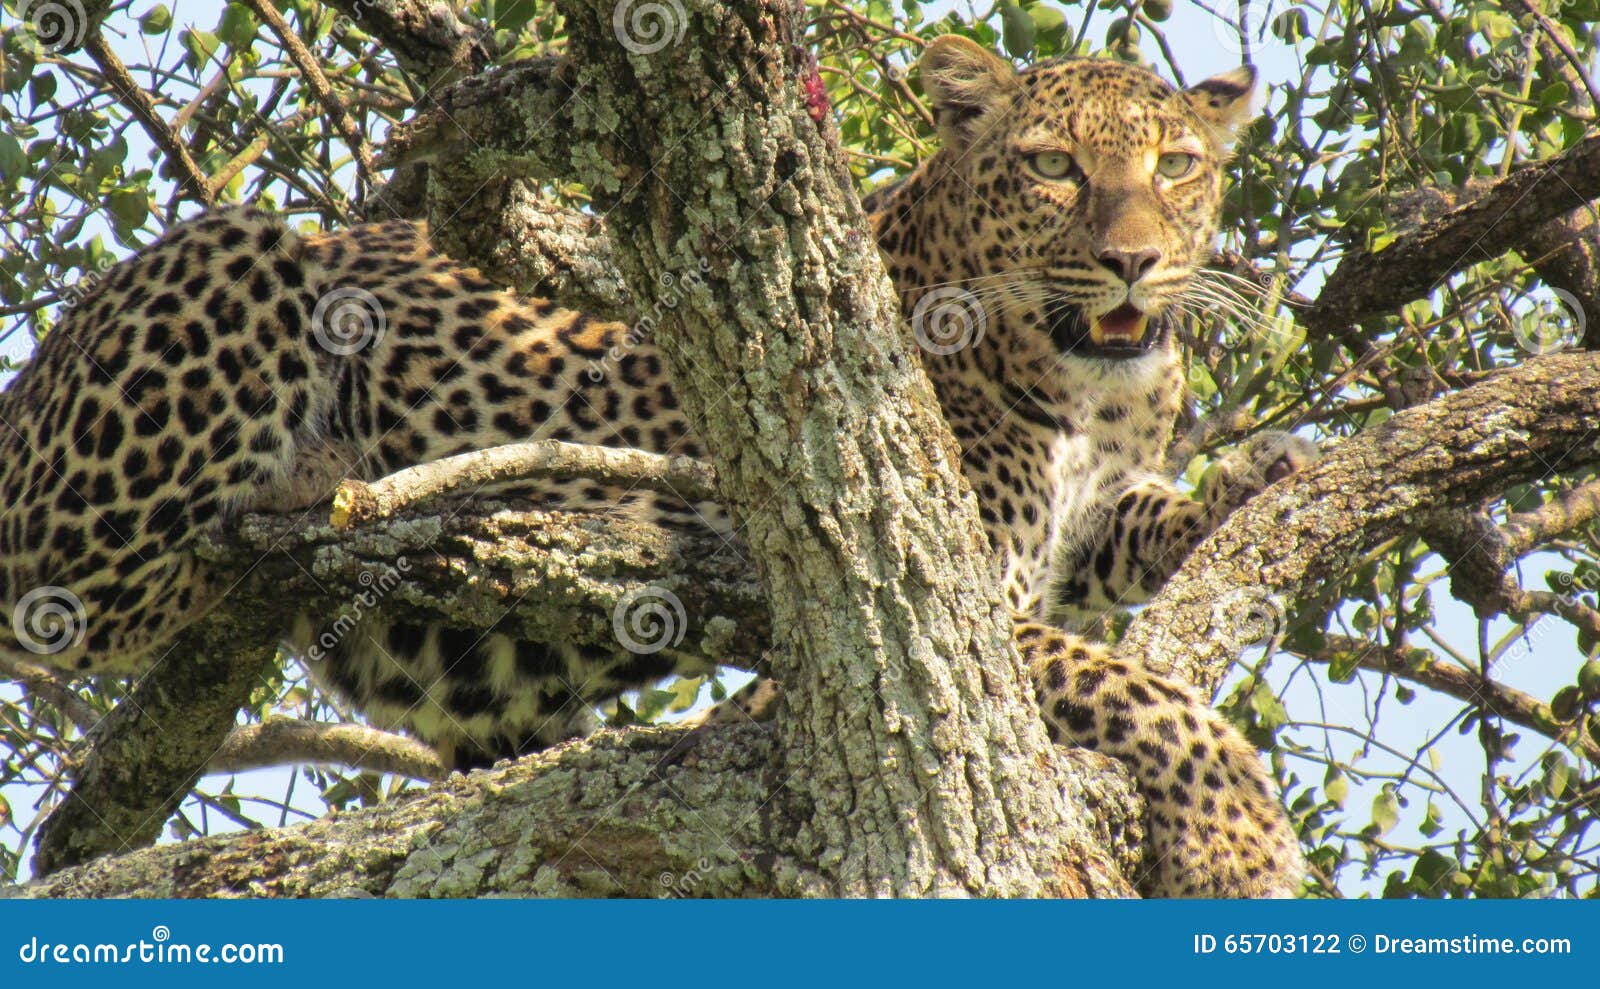 the elusive leopard